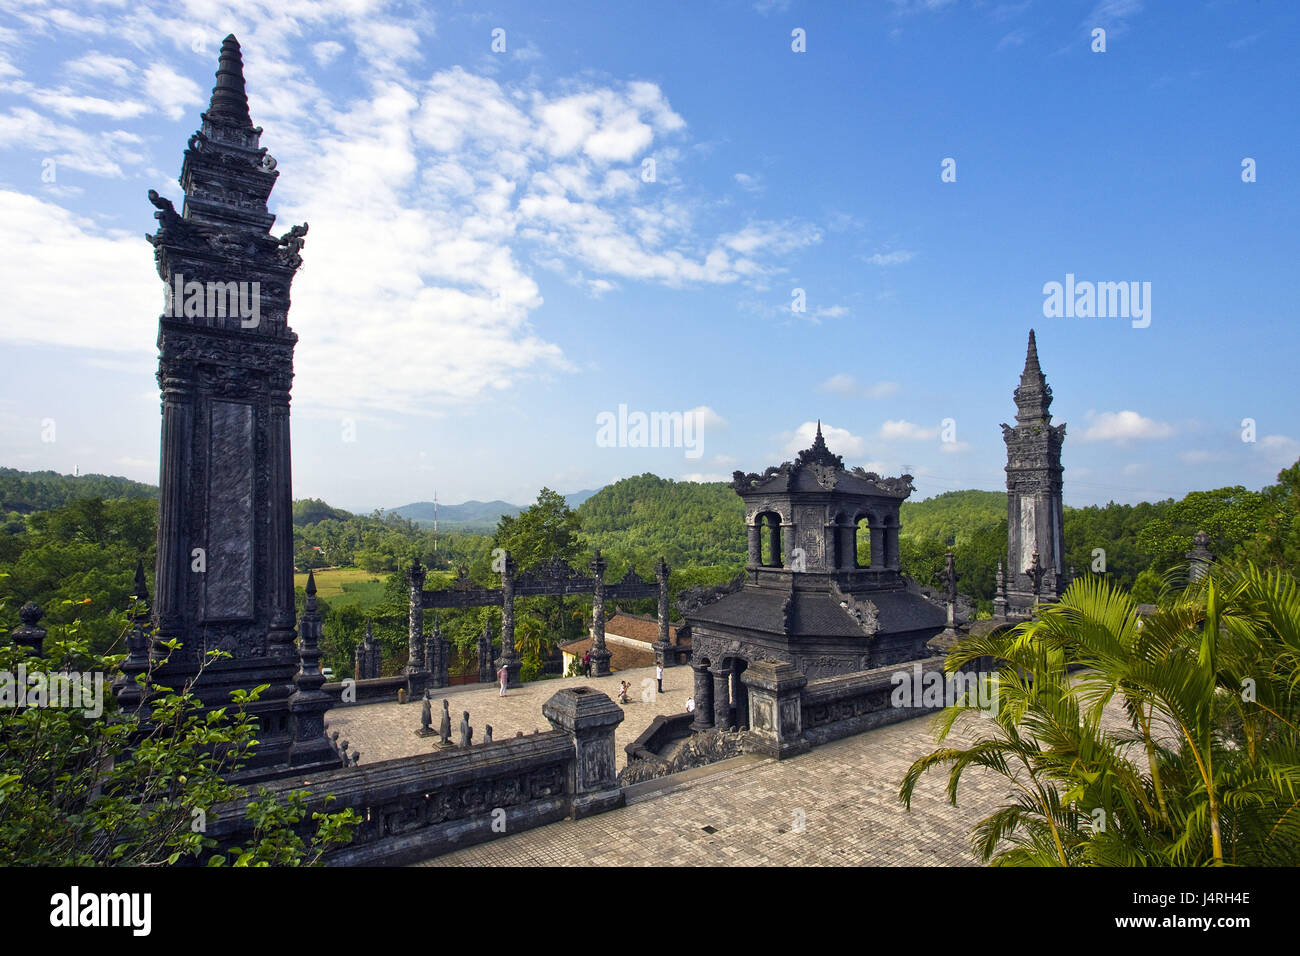 Il Vietnam, Chau Chu, Khai cosa mausoleo Ung lungo, Foto Stock